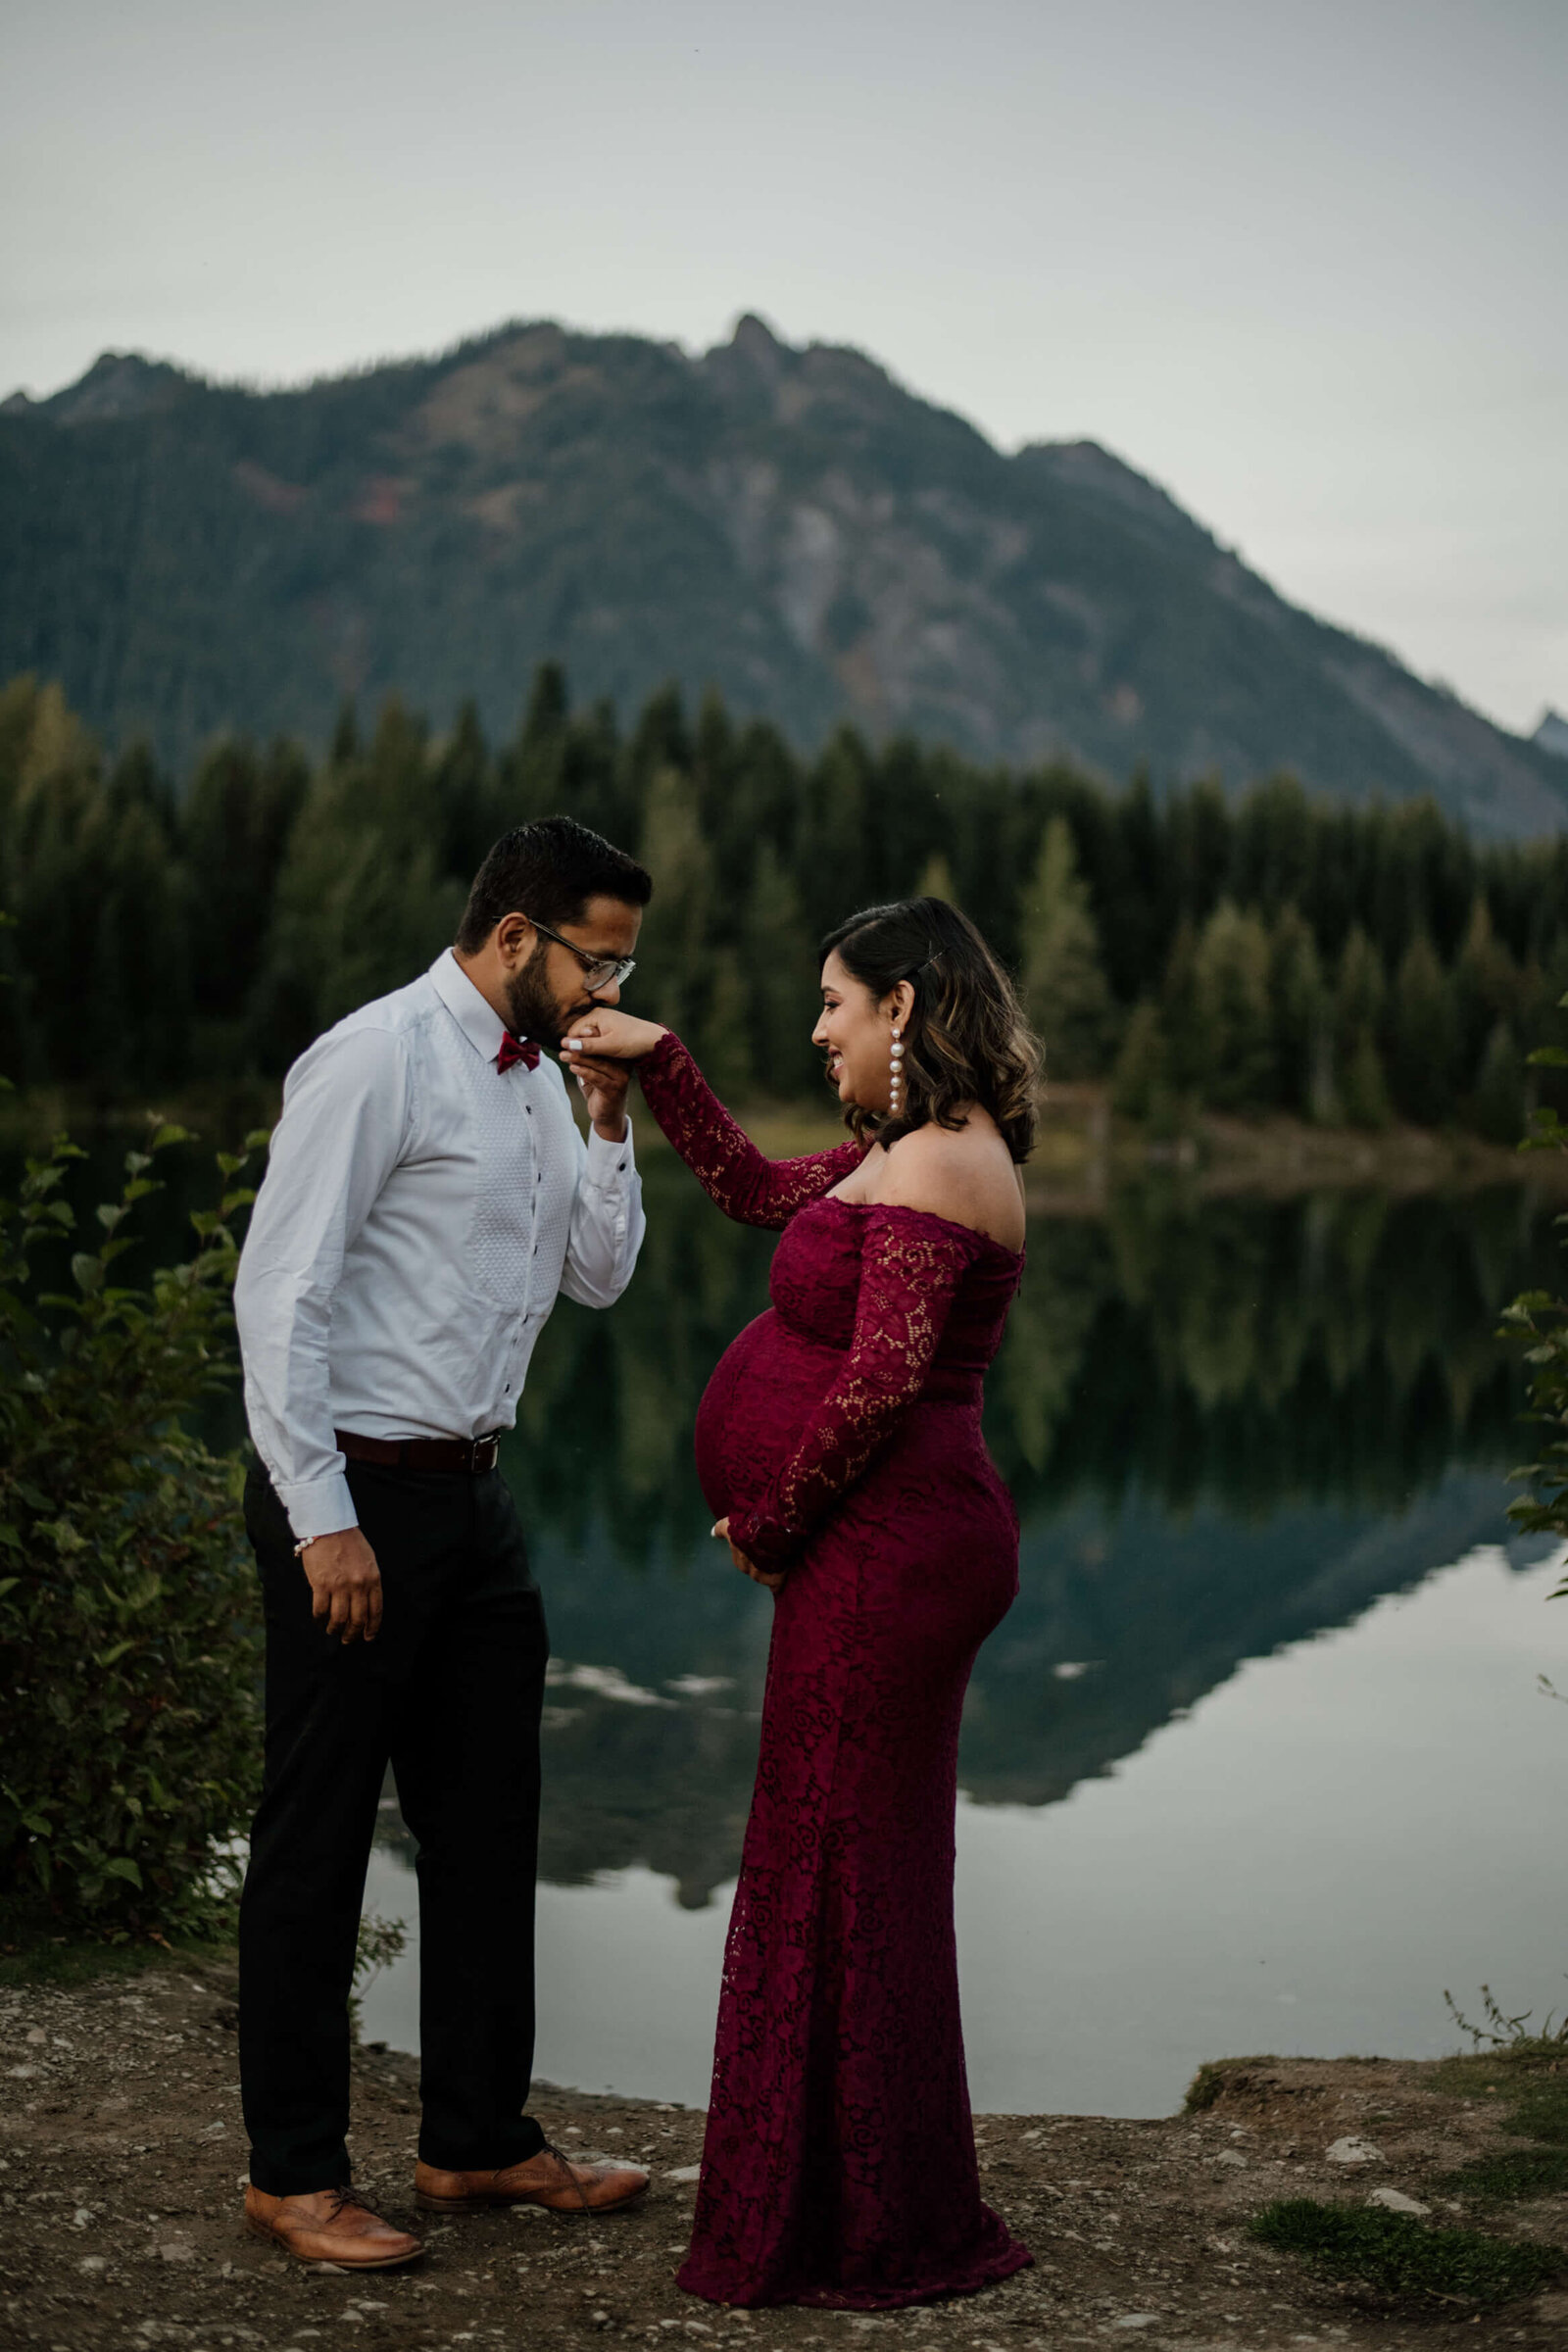 Husband kisses pregnant wife's hand.